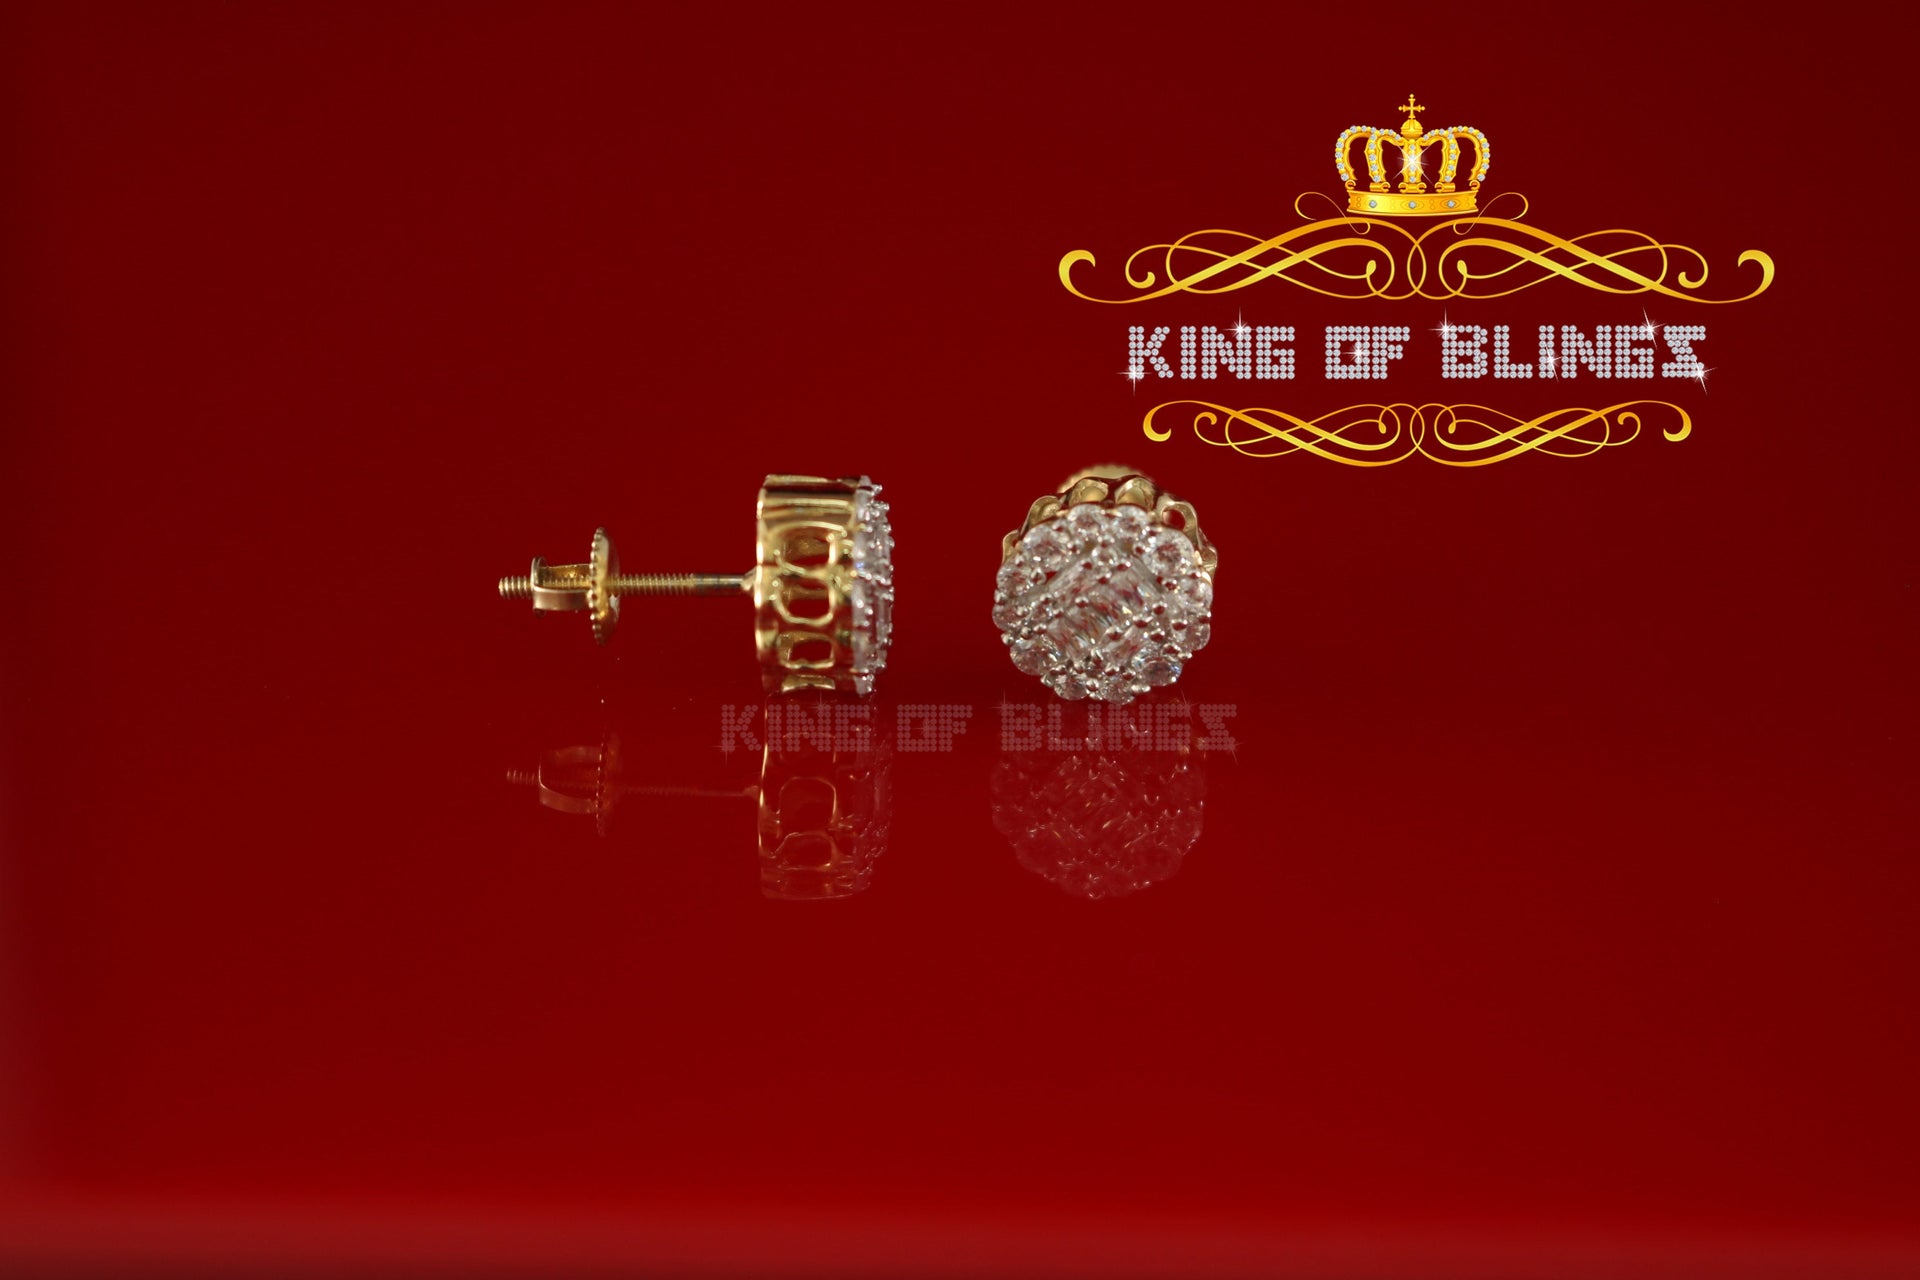 King of Bling's 0.94ct Cubic Zirconia 925 Yellow Silver Women's & Men's Hip Hop Flower Earrings KING OF BLINGS